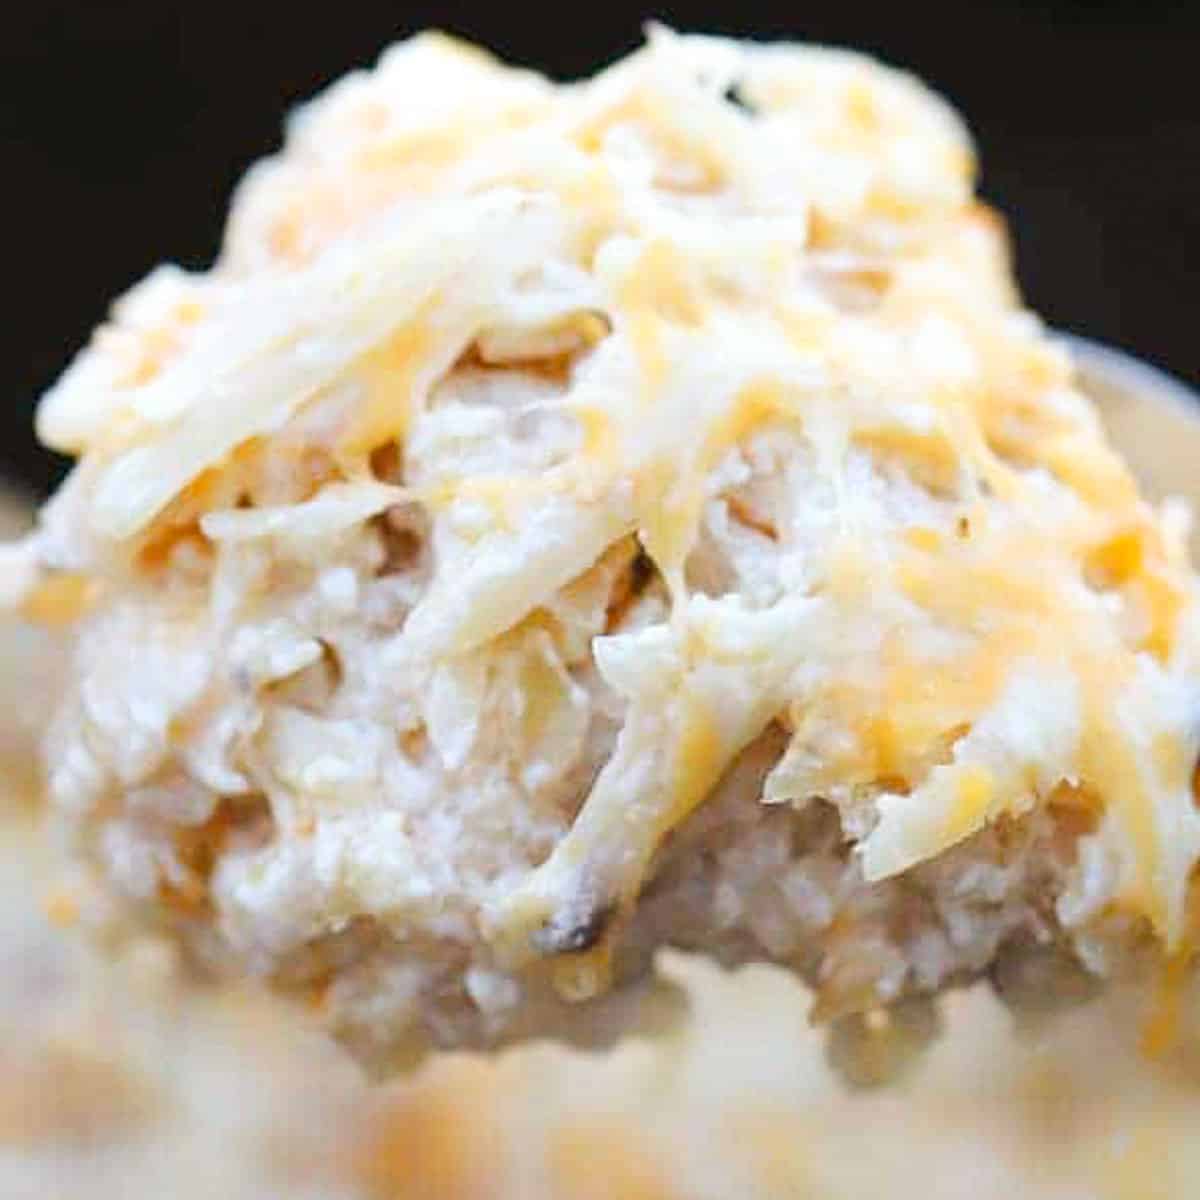 slow cooker cheesy hash brown potatoes recipe is an easy crockpot potatoes recipe